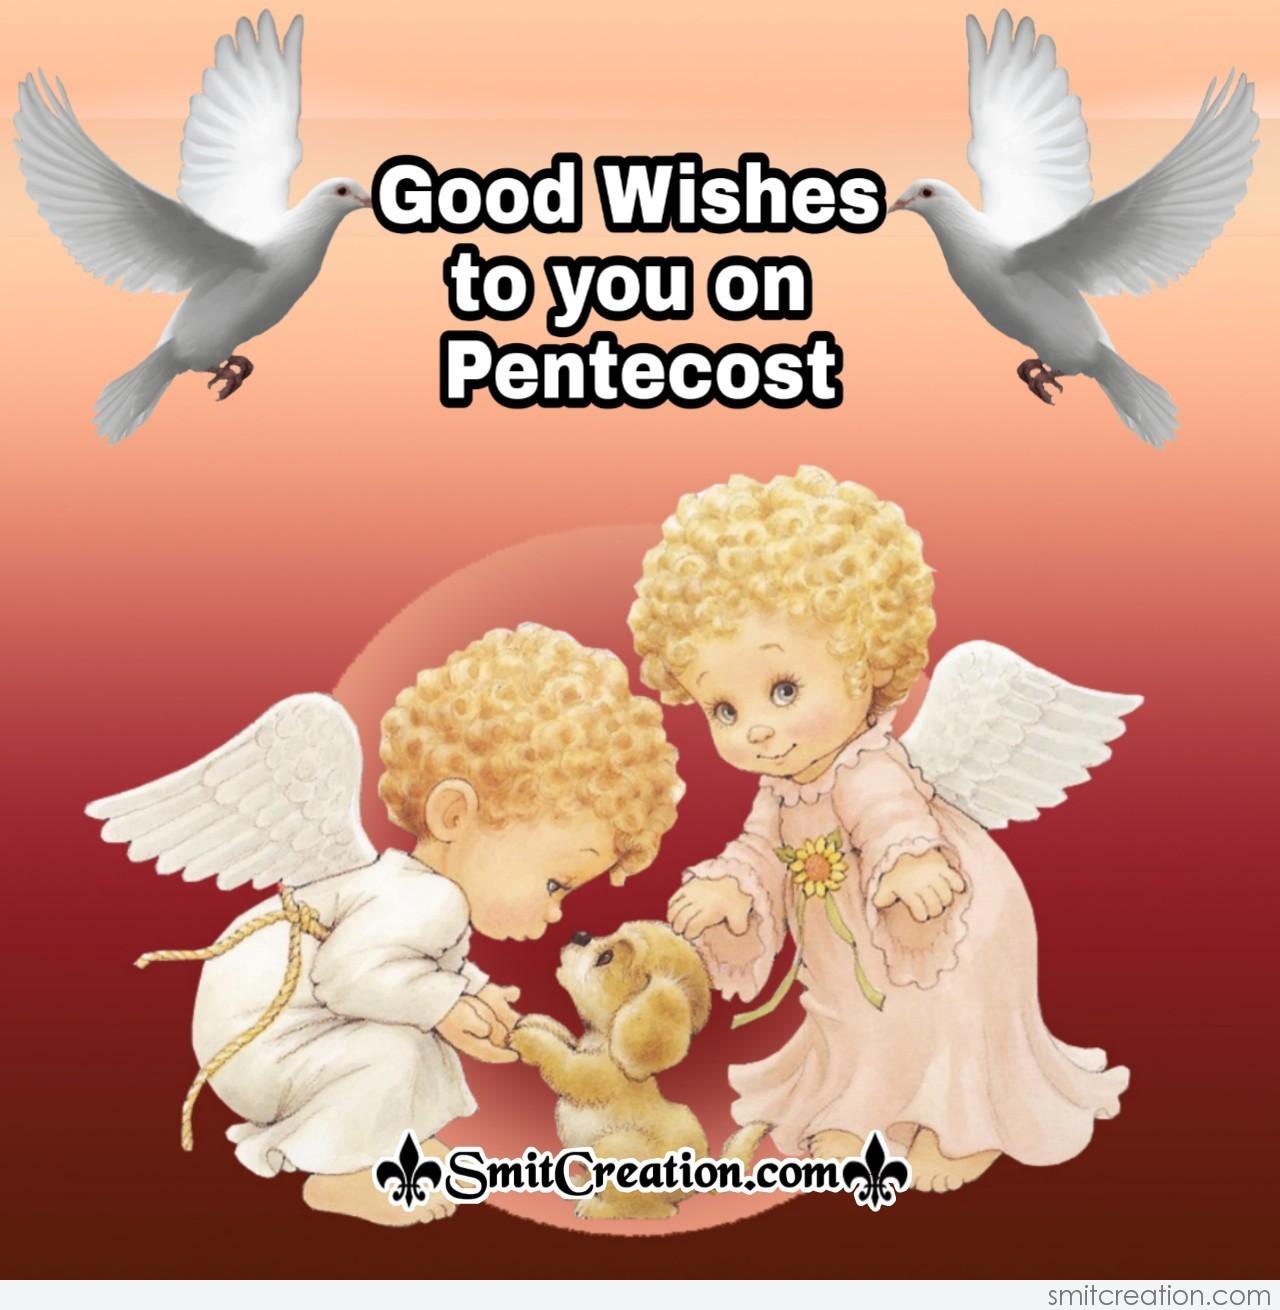 Good Wishes To You On Pentecost - SmitCreation.com